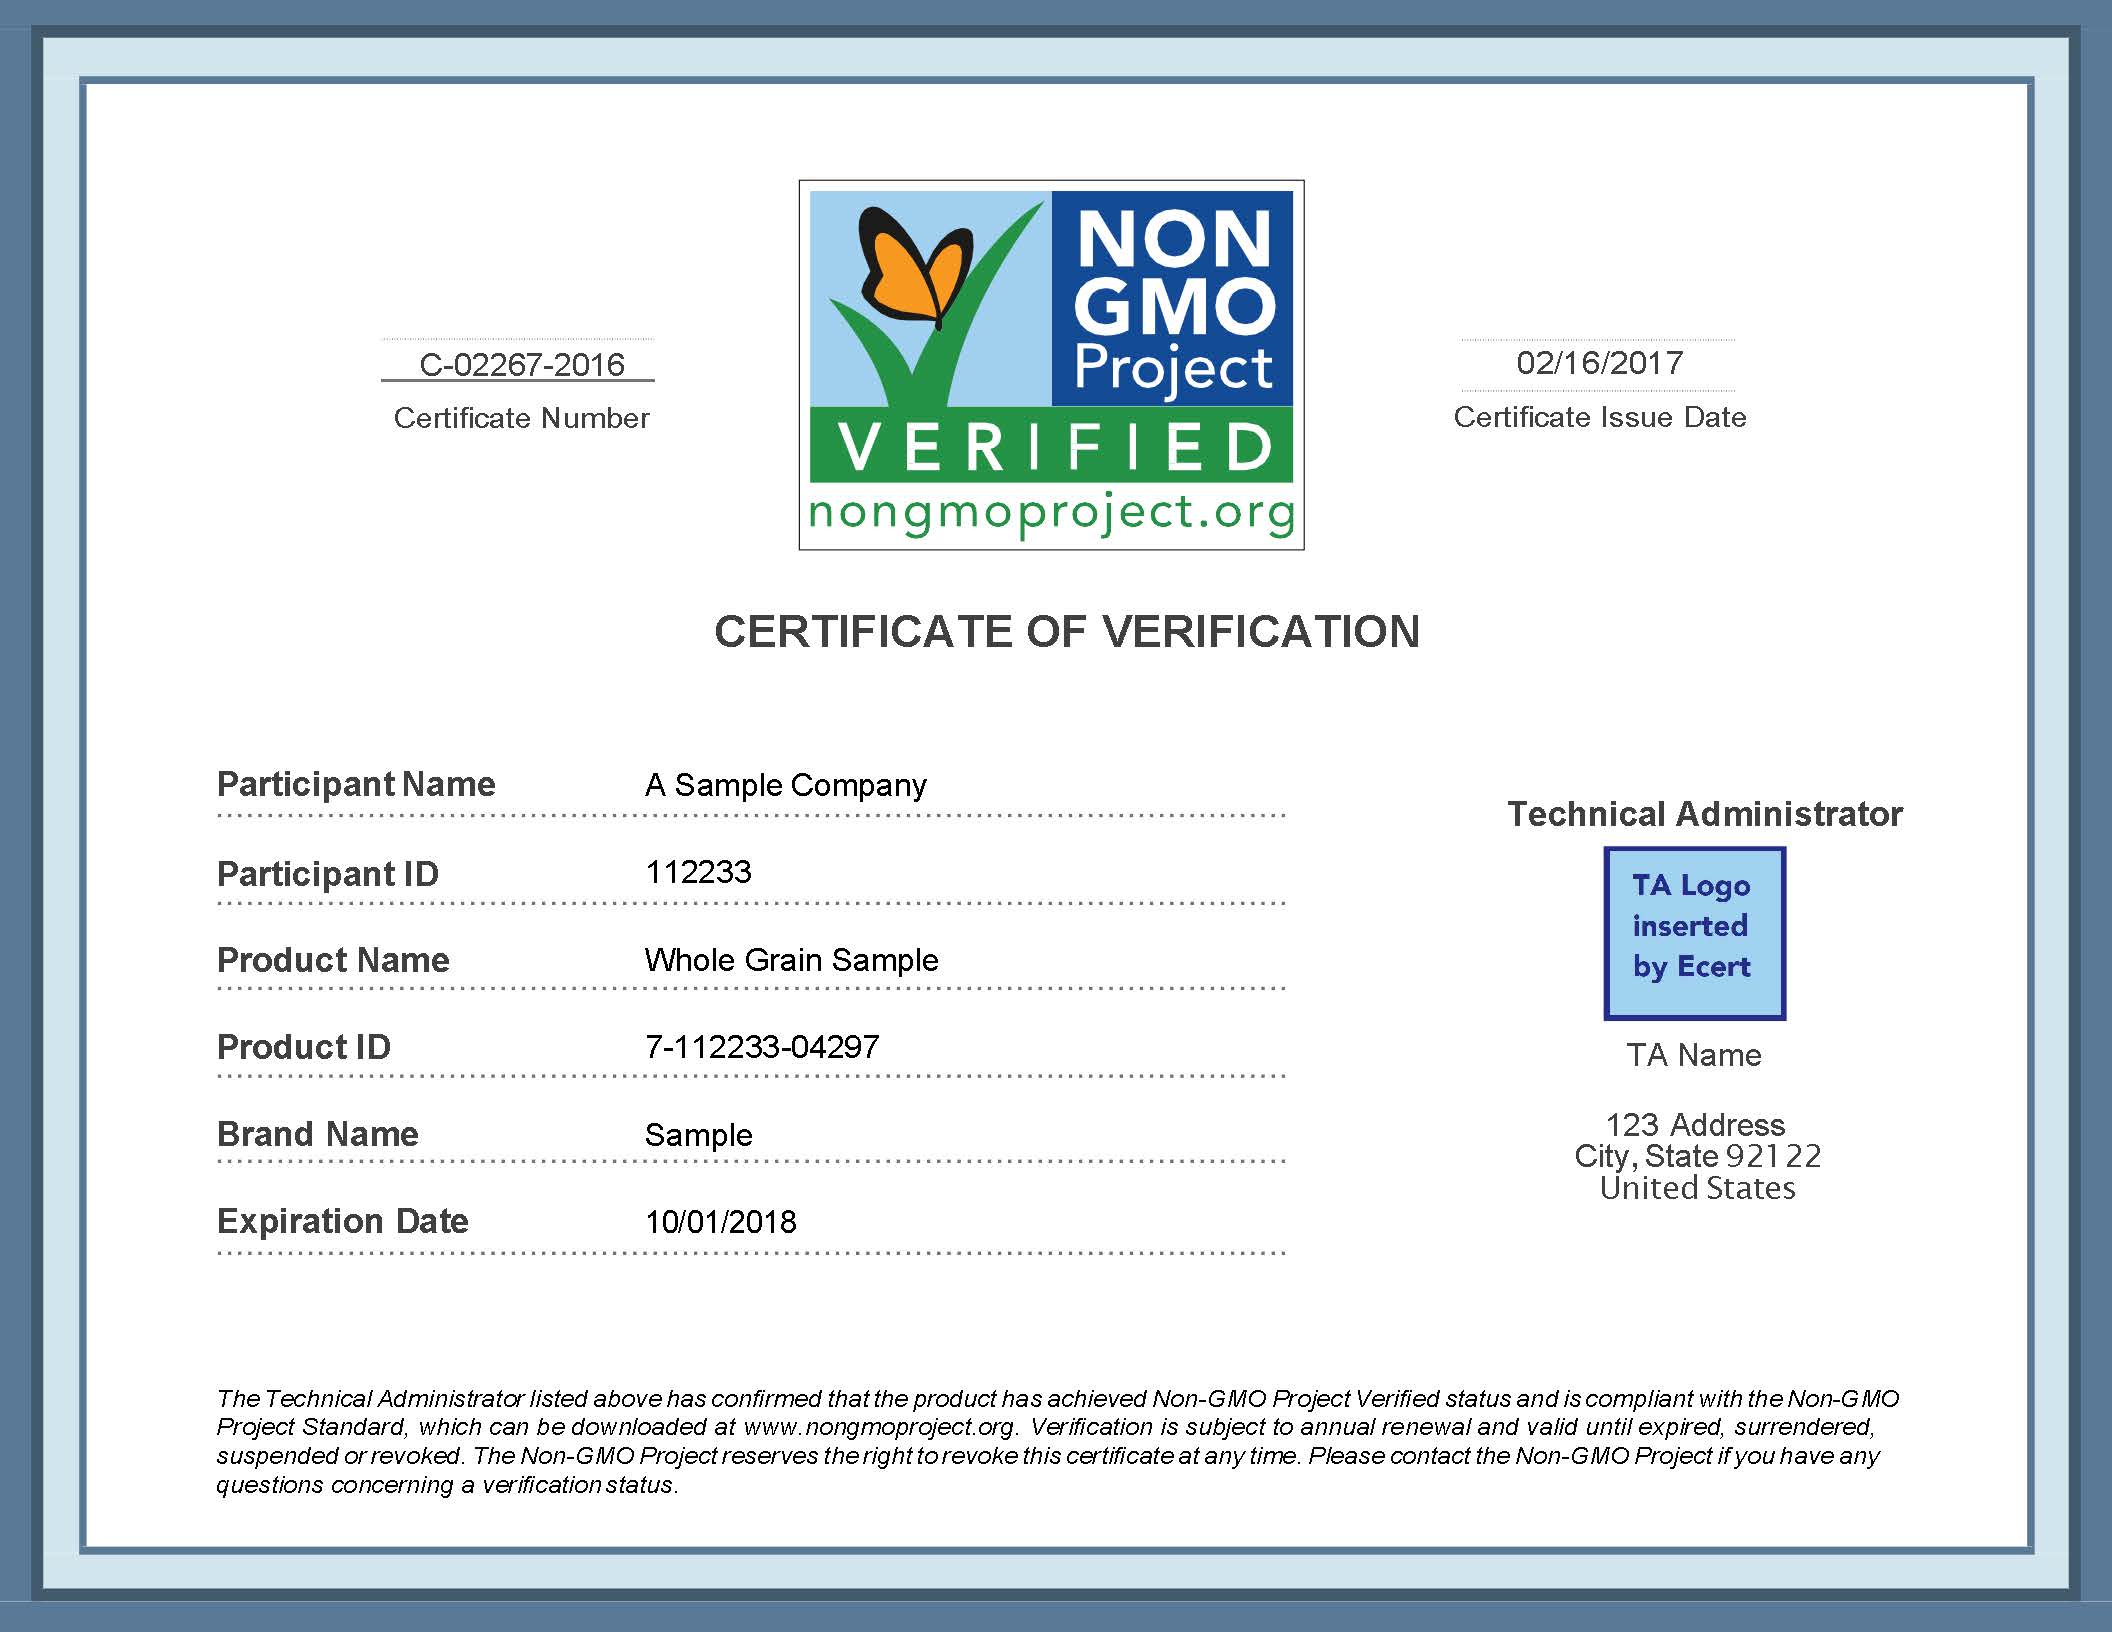 Certificate of Verification